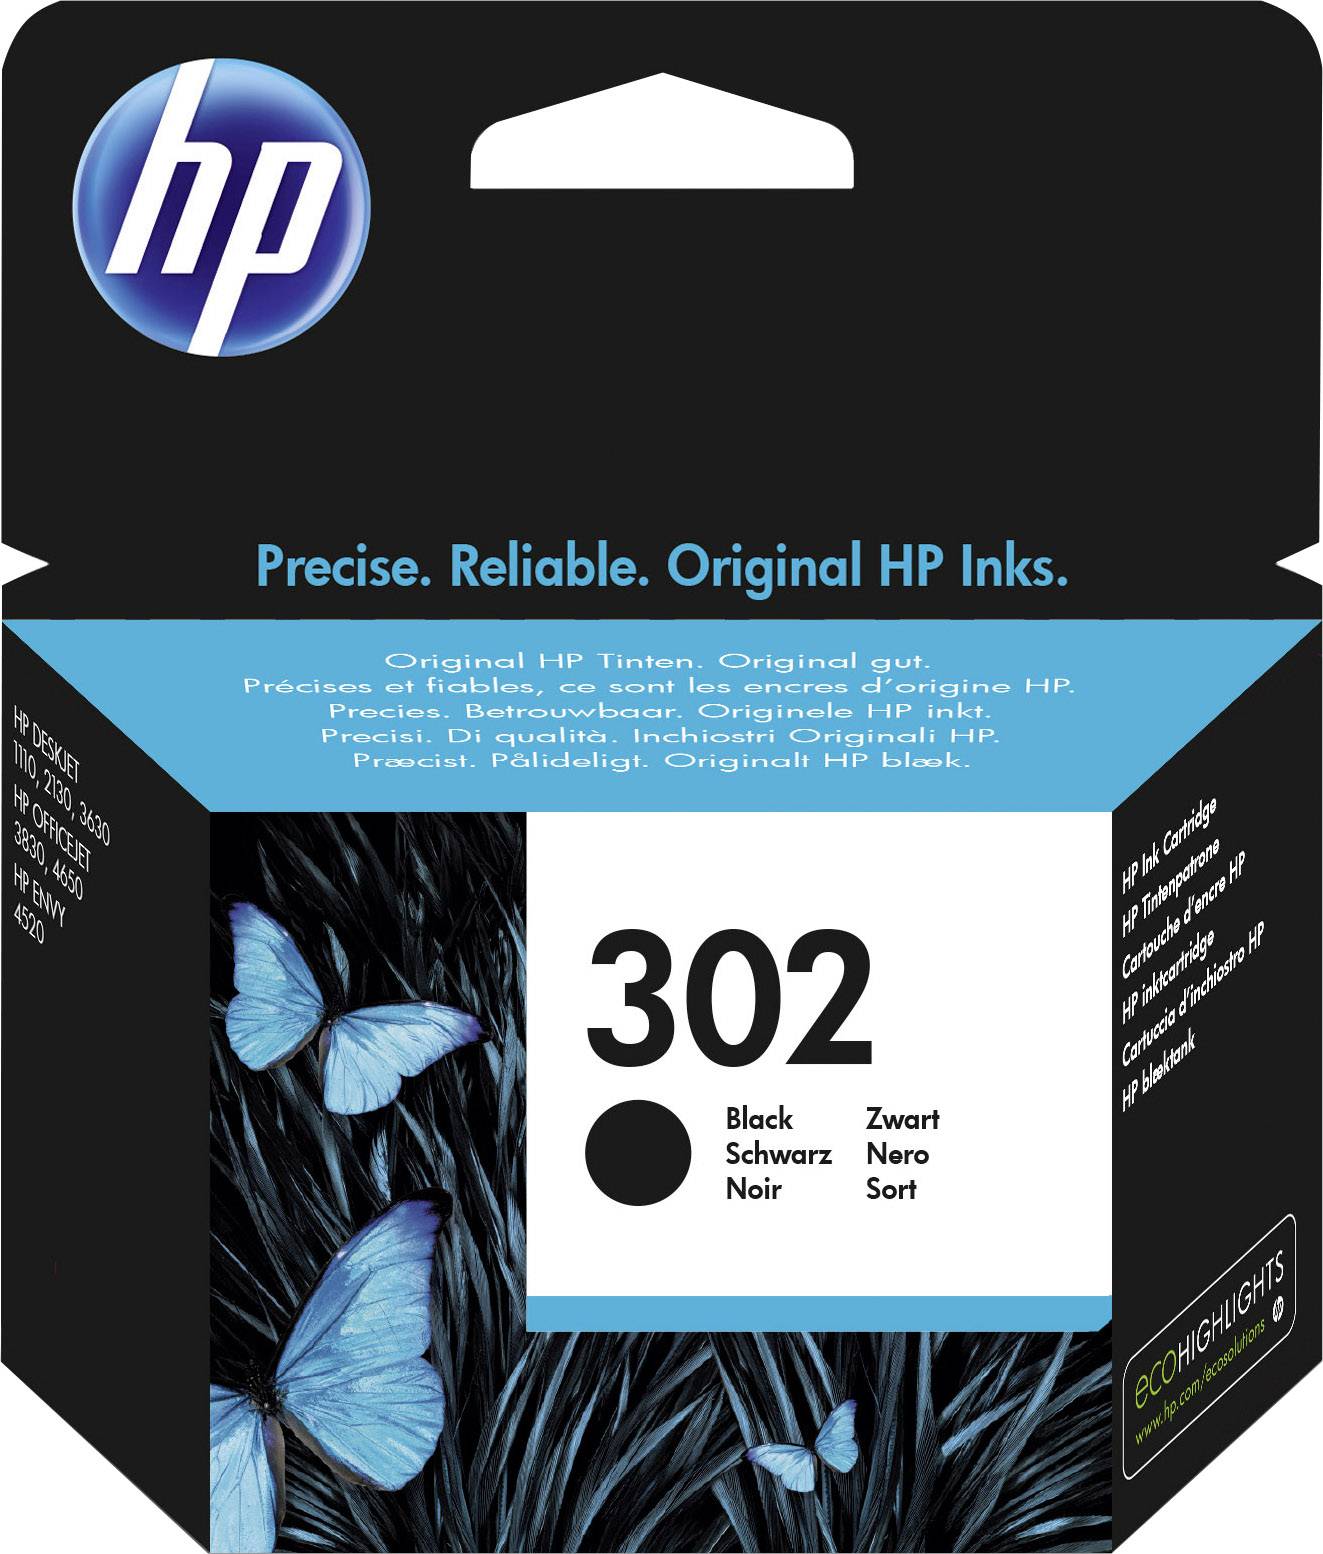 HP 302 Black Original Ink Cartridge